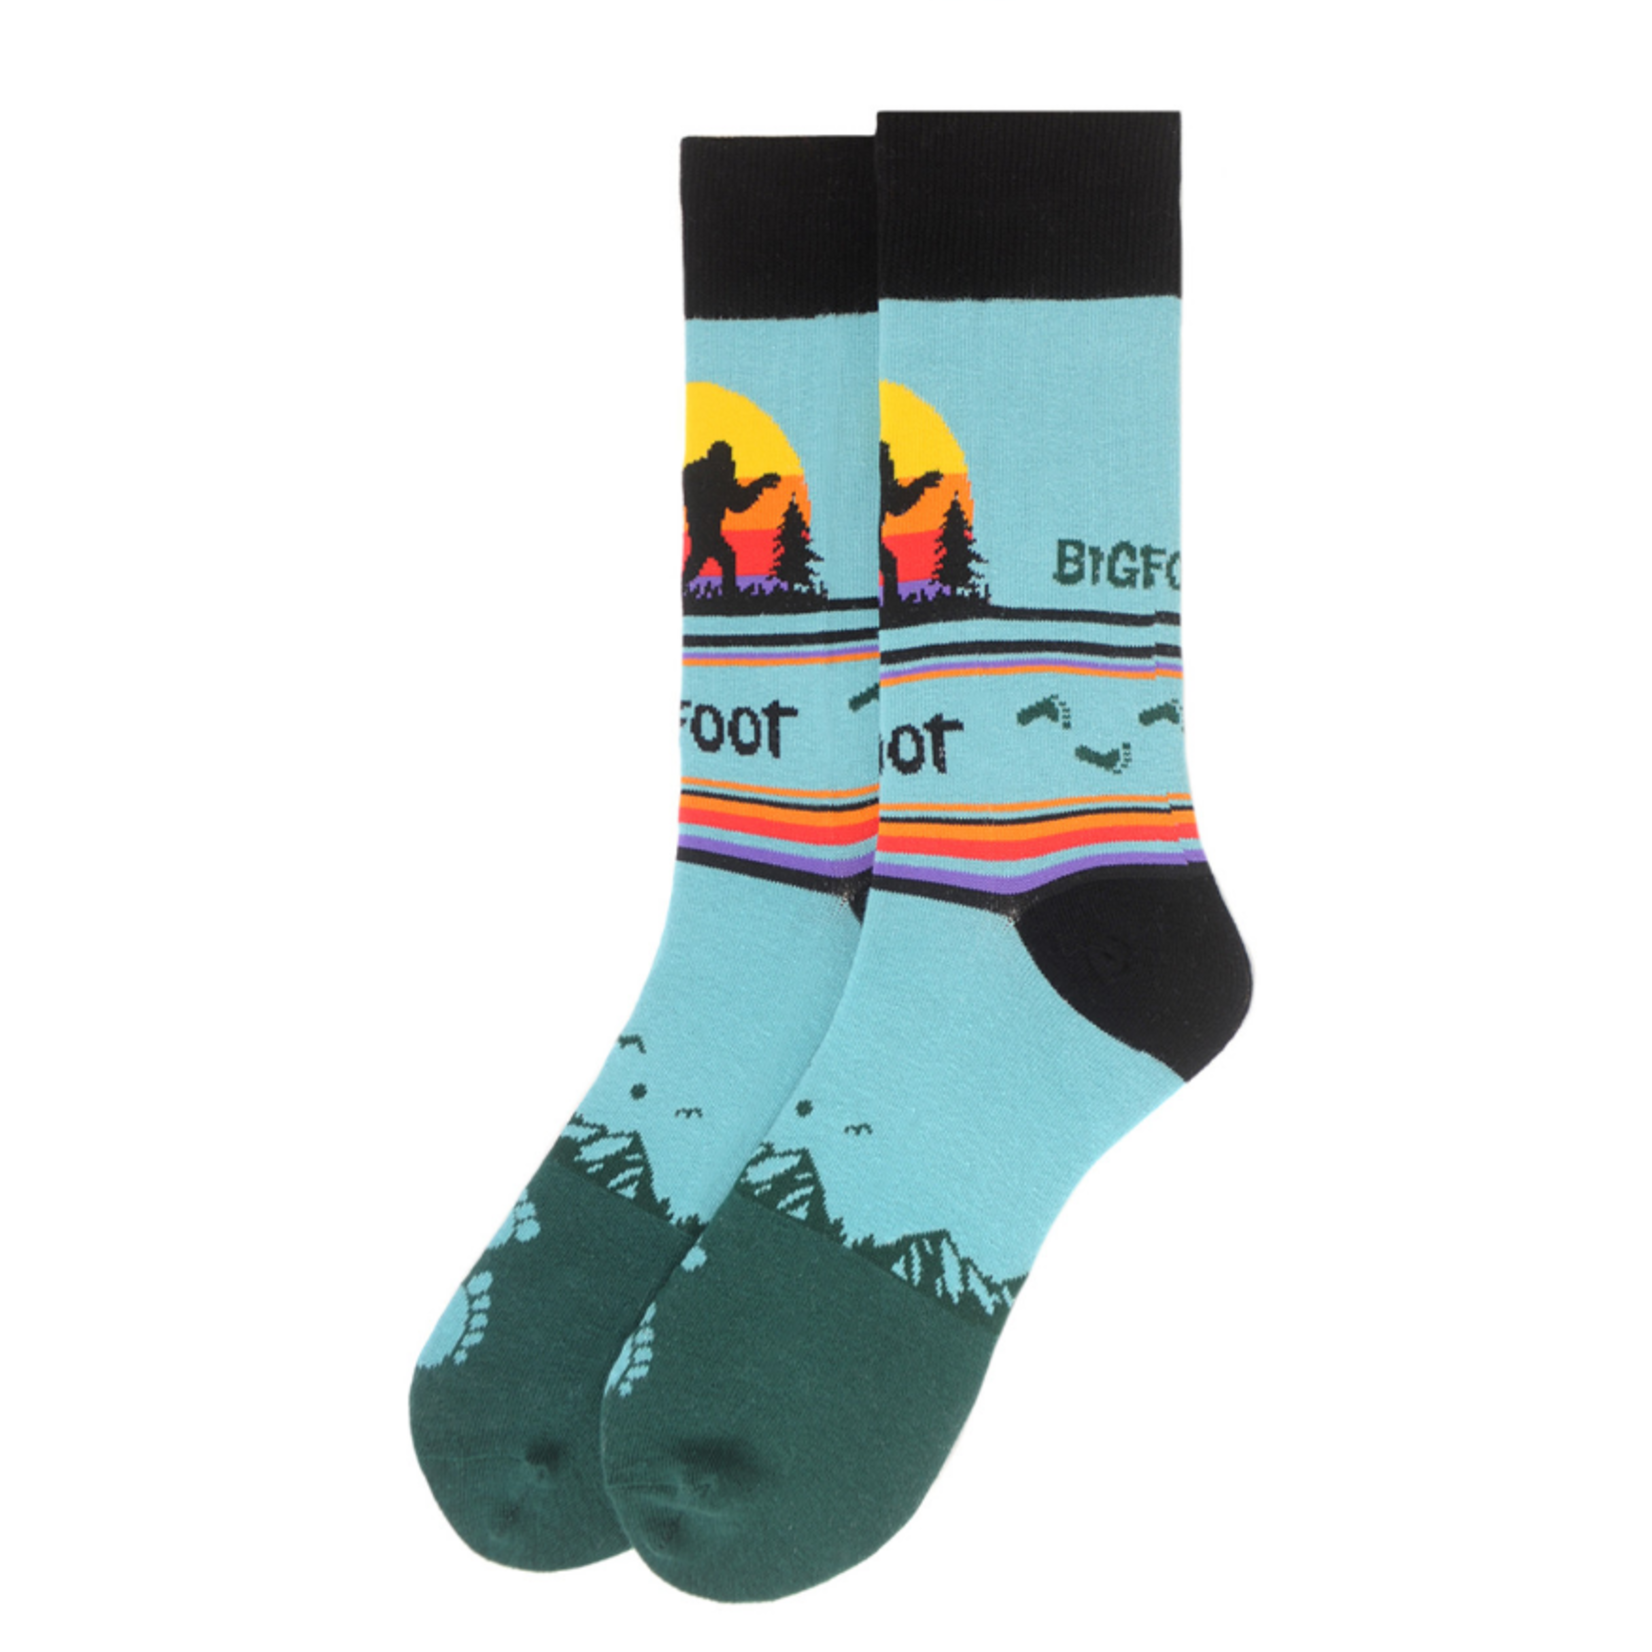 Selini Men's Big Foot Novelty Socks